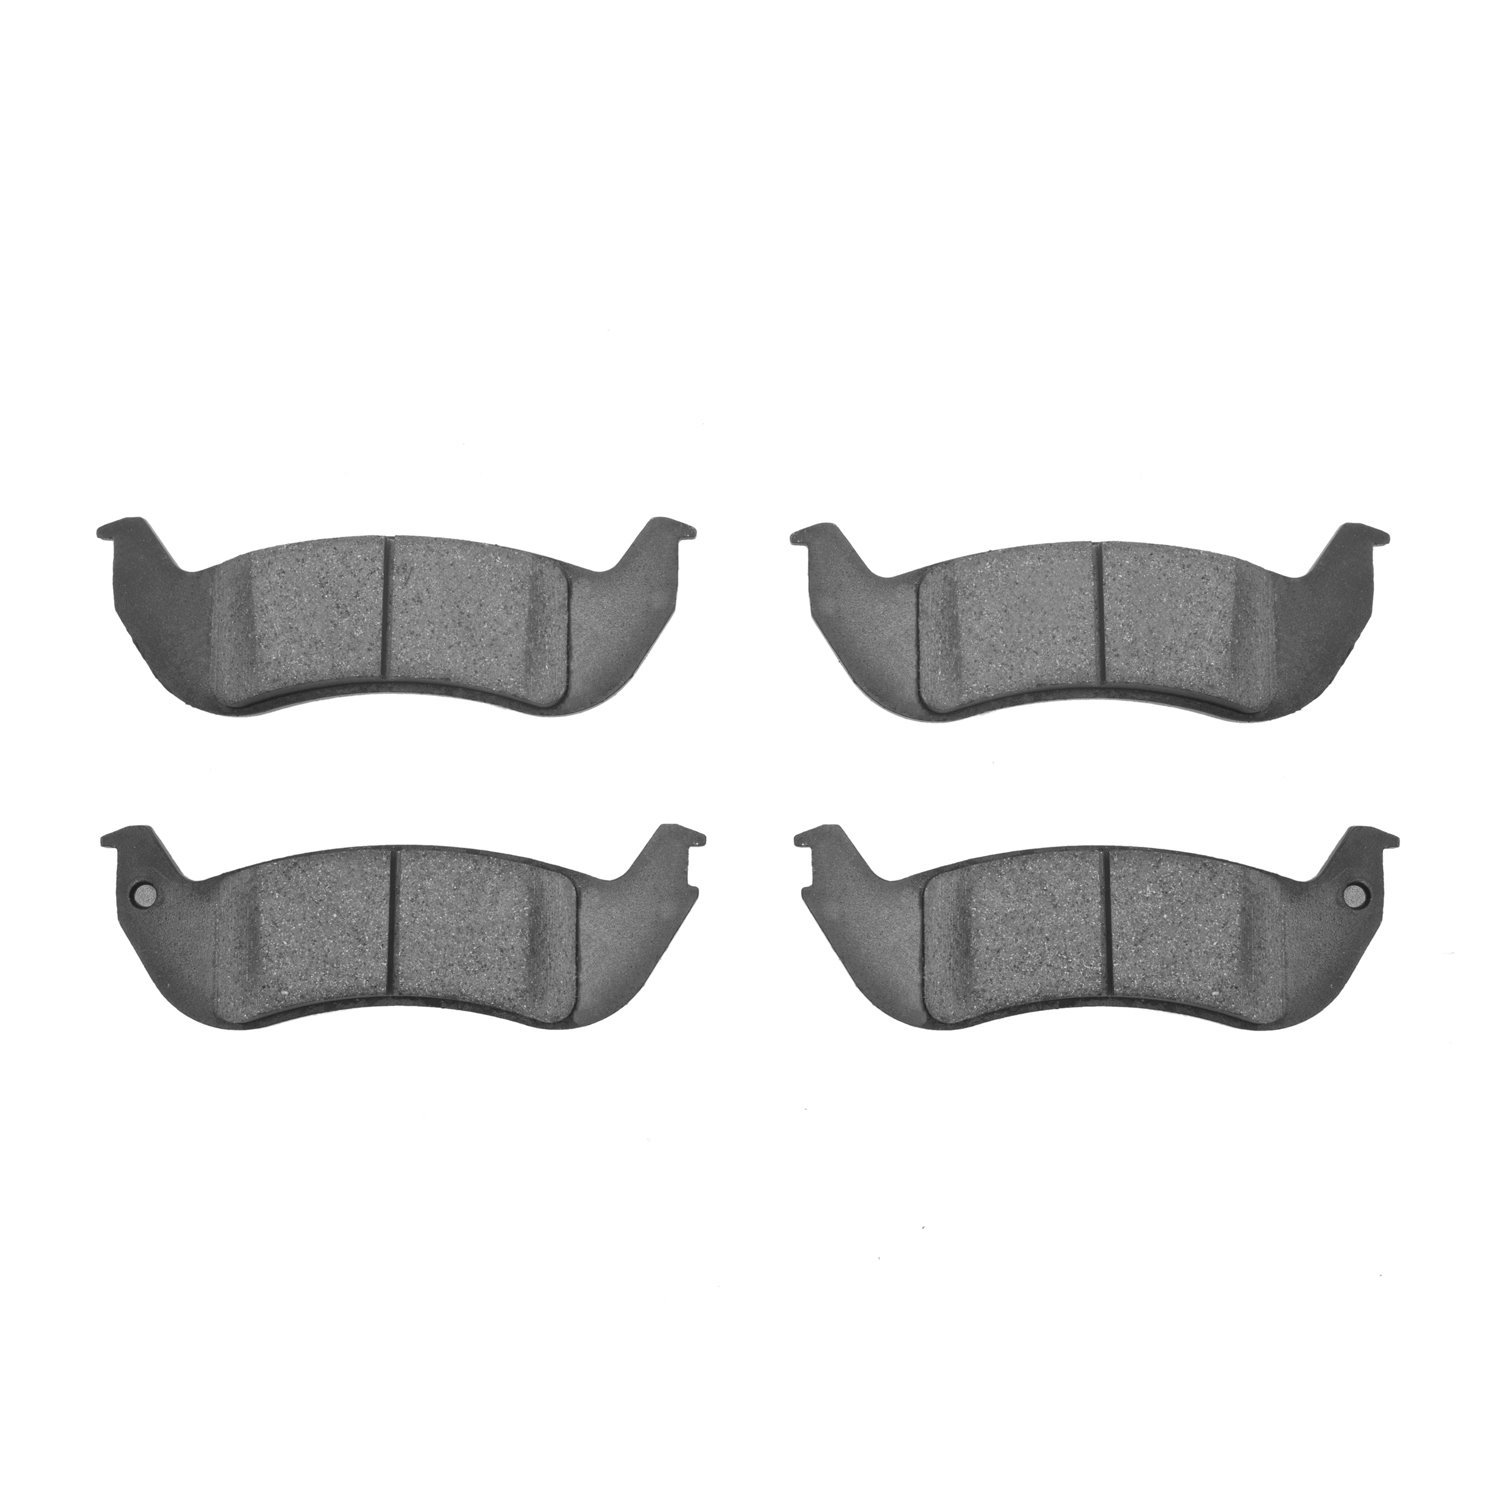 Super-Duty Brake Pads, 2003-2011 Ford/Lincoln/Mercury/Mazda, Position: Rear